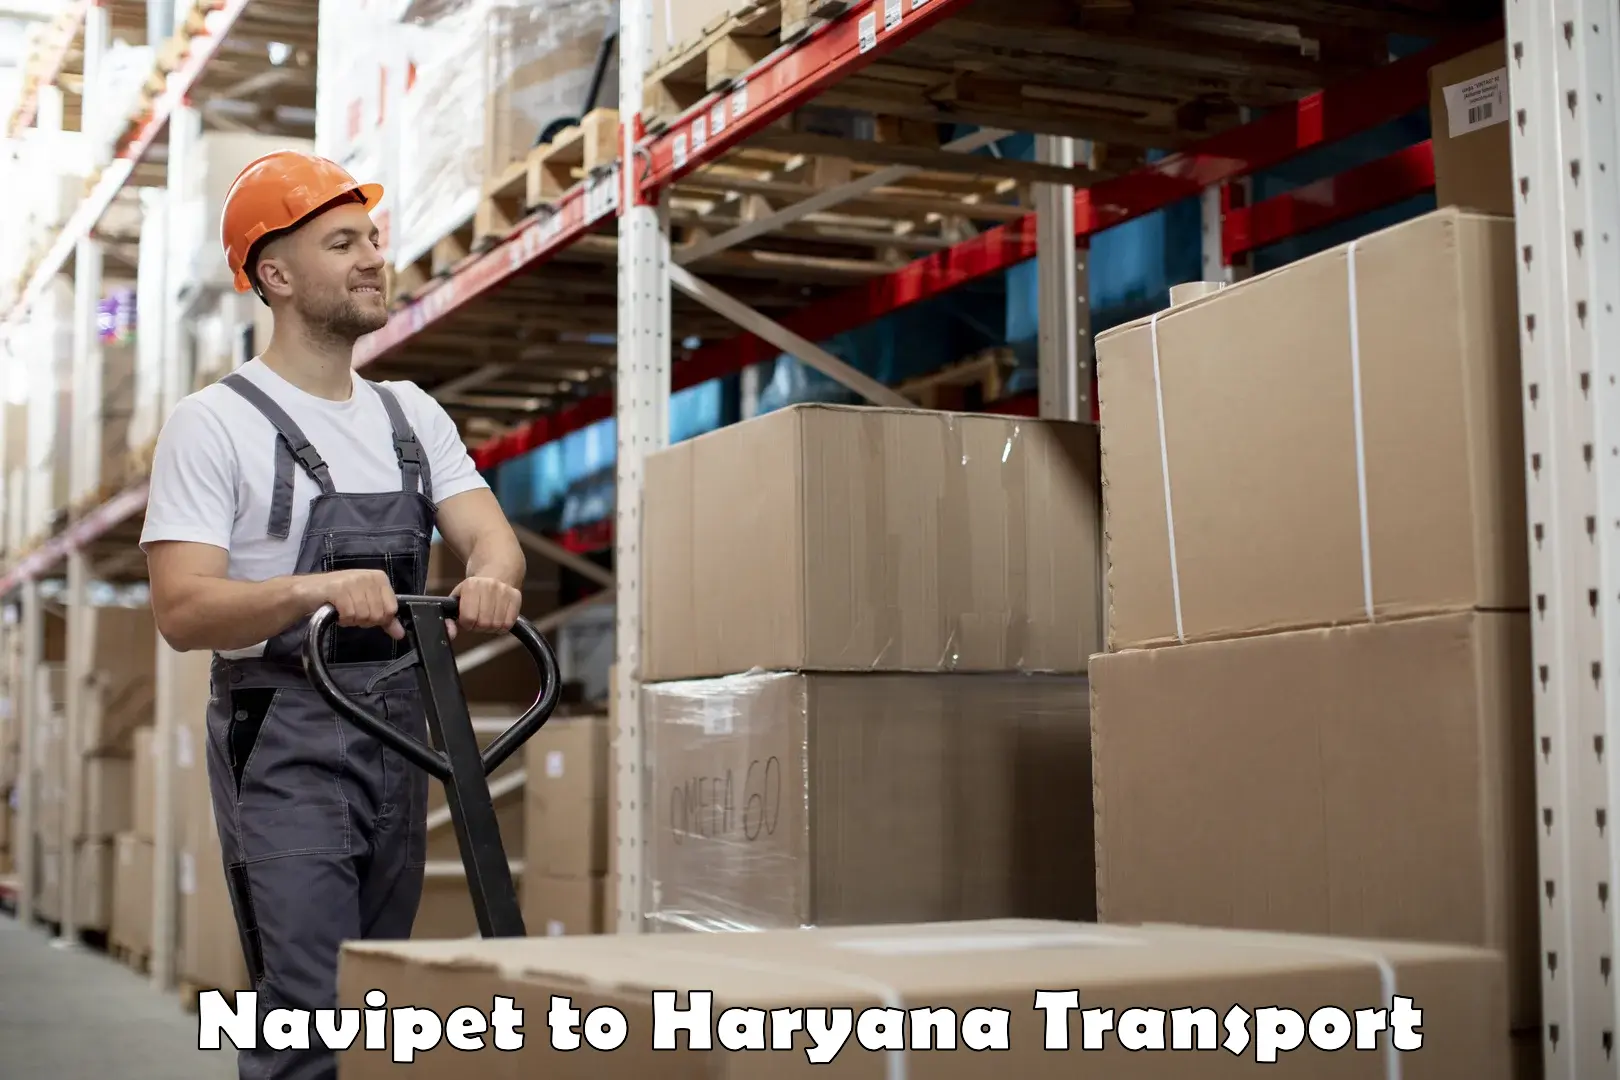 Nearby transport service Navipet to Haryana